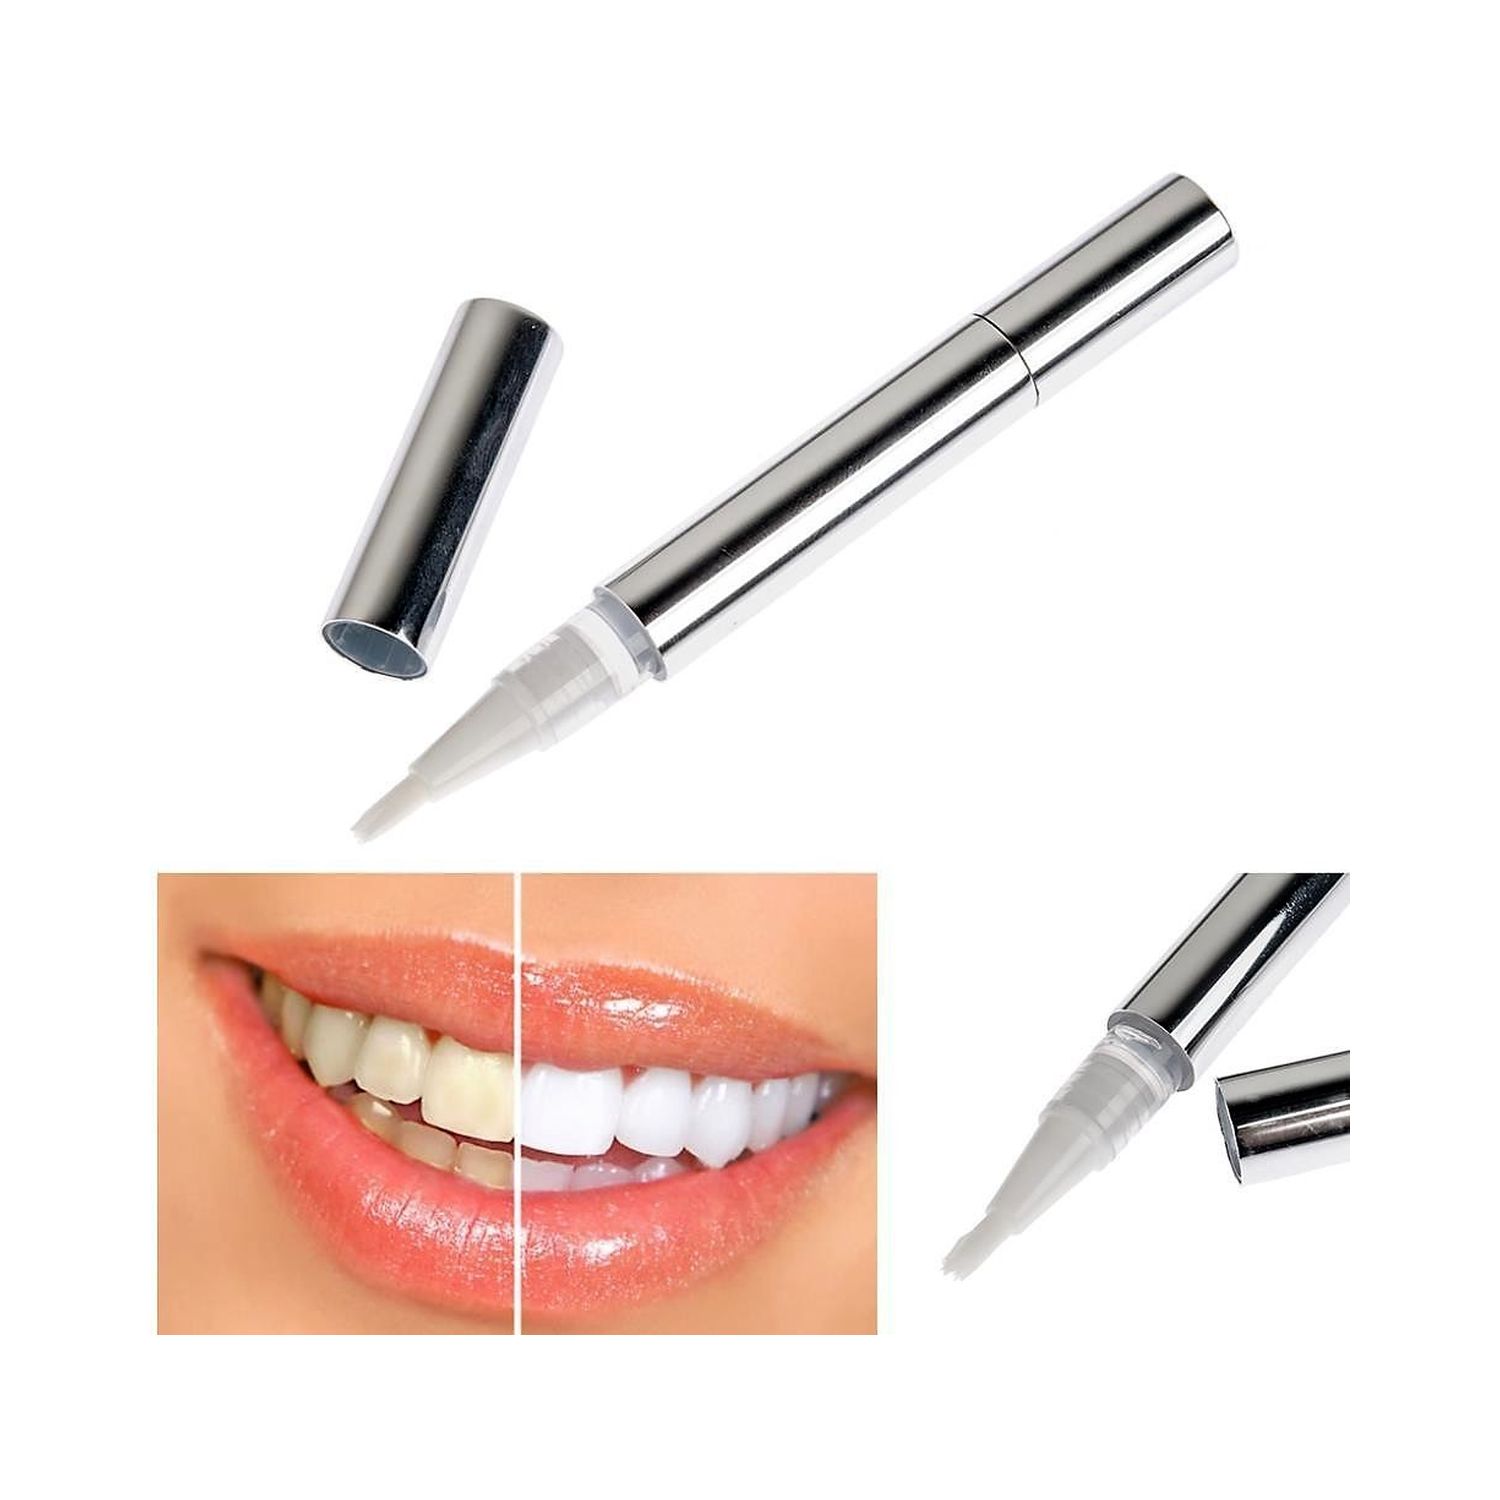 Карандаш для отбеливания зубов Ripoma Teeth Whitening Pen - фото 2